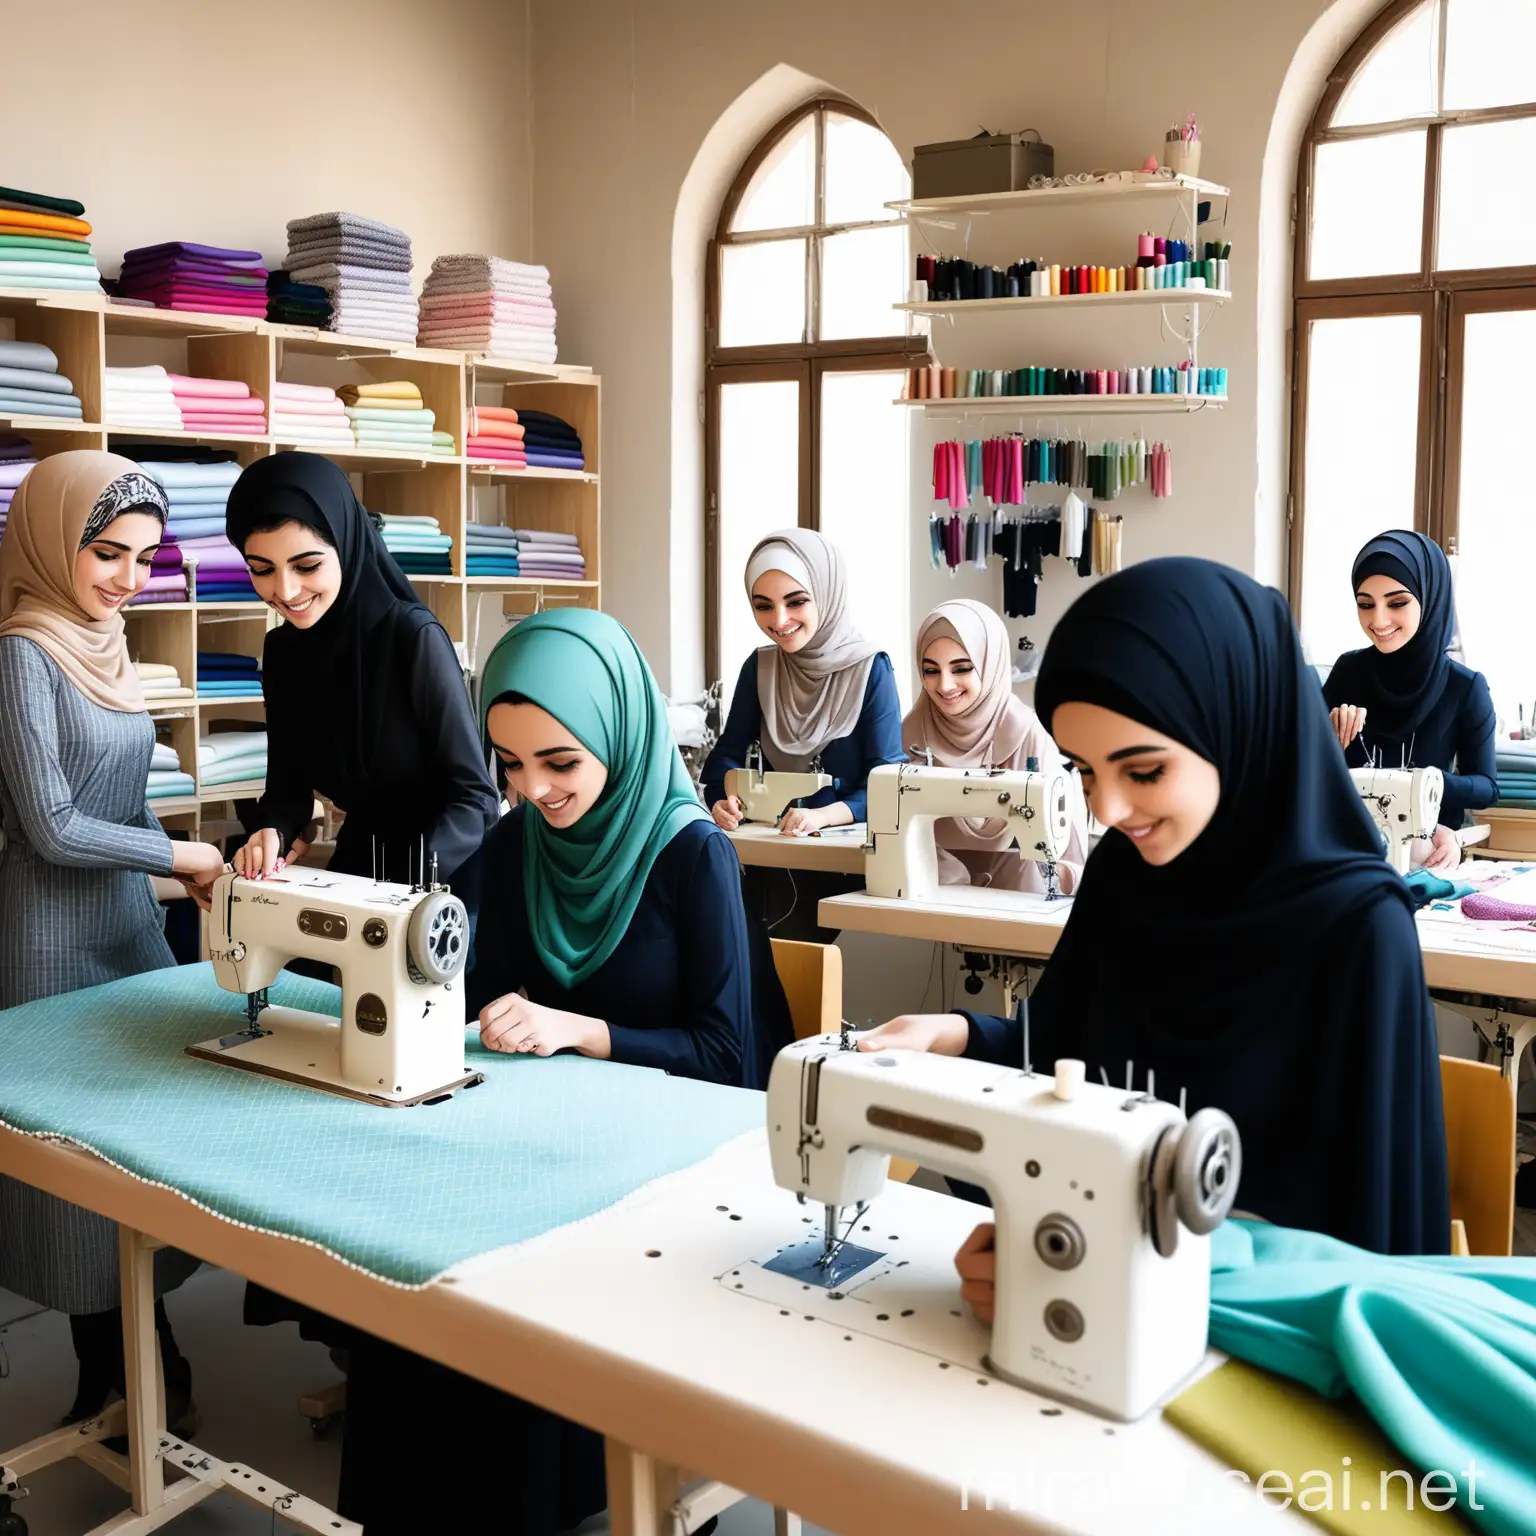 Iranian Women Tailors Creating Fashion in Stylish Workshop